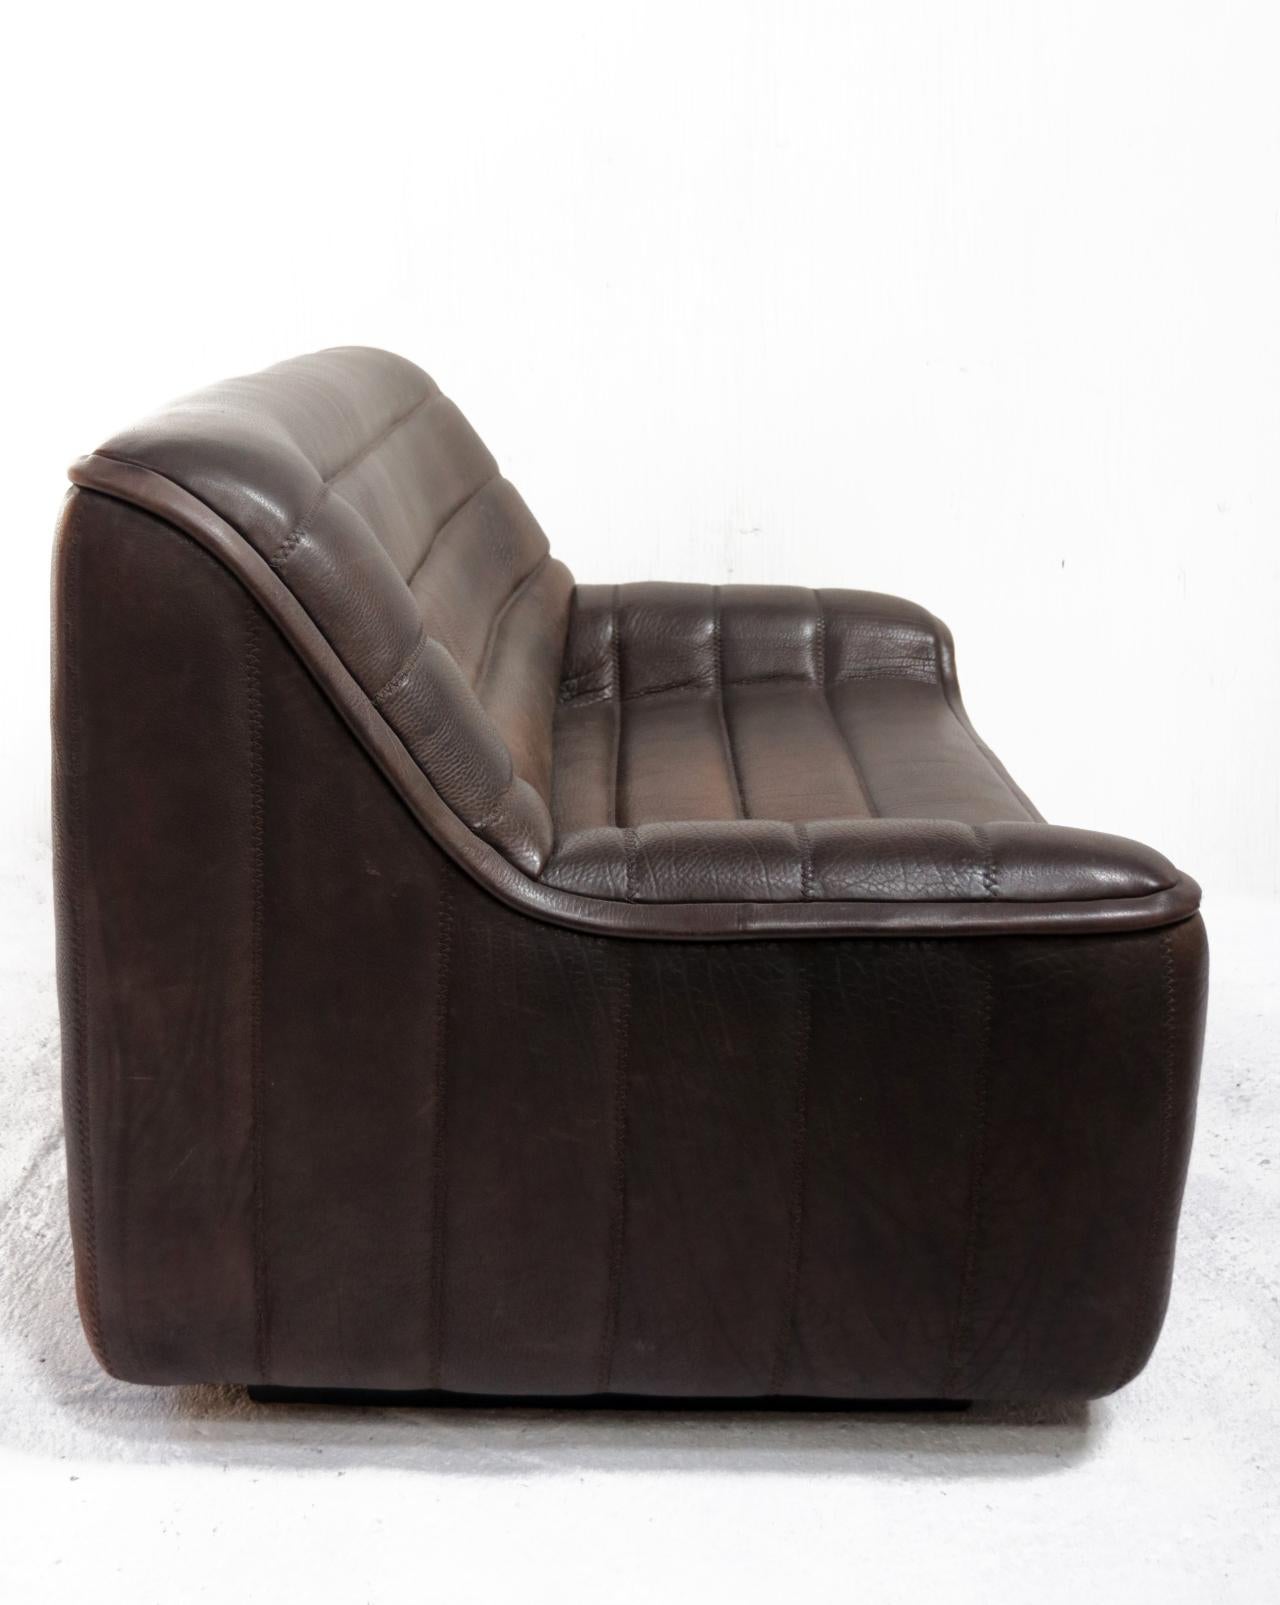 Vintage Design De Sede DS 84 Leather Sofa, Switzerland, 1970s 2